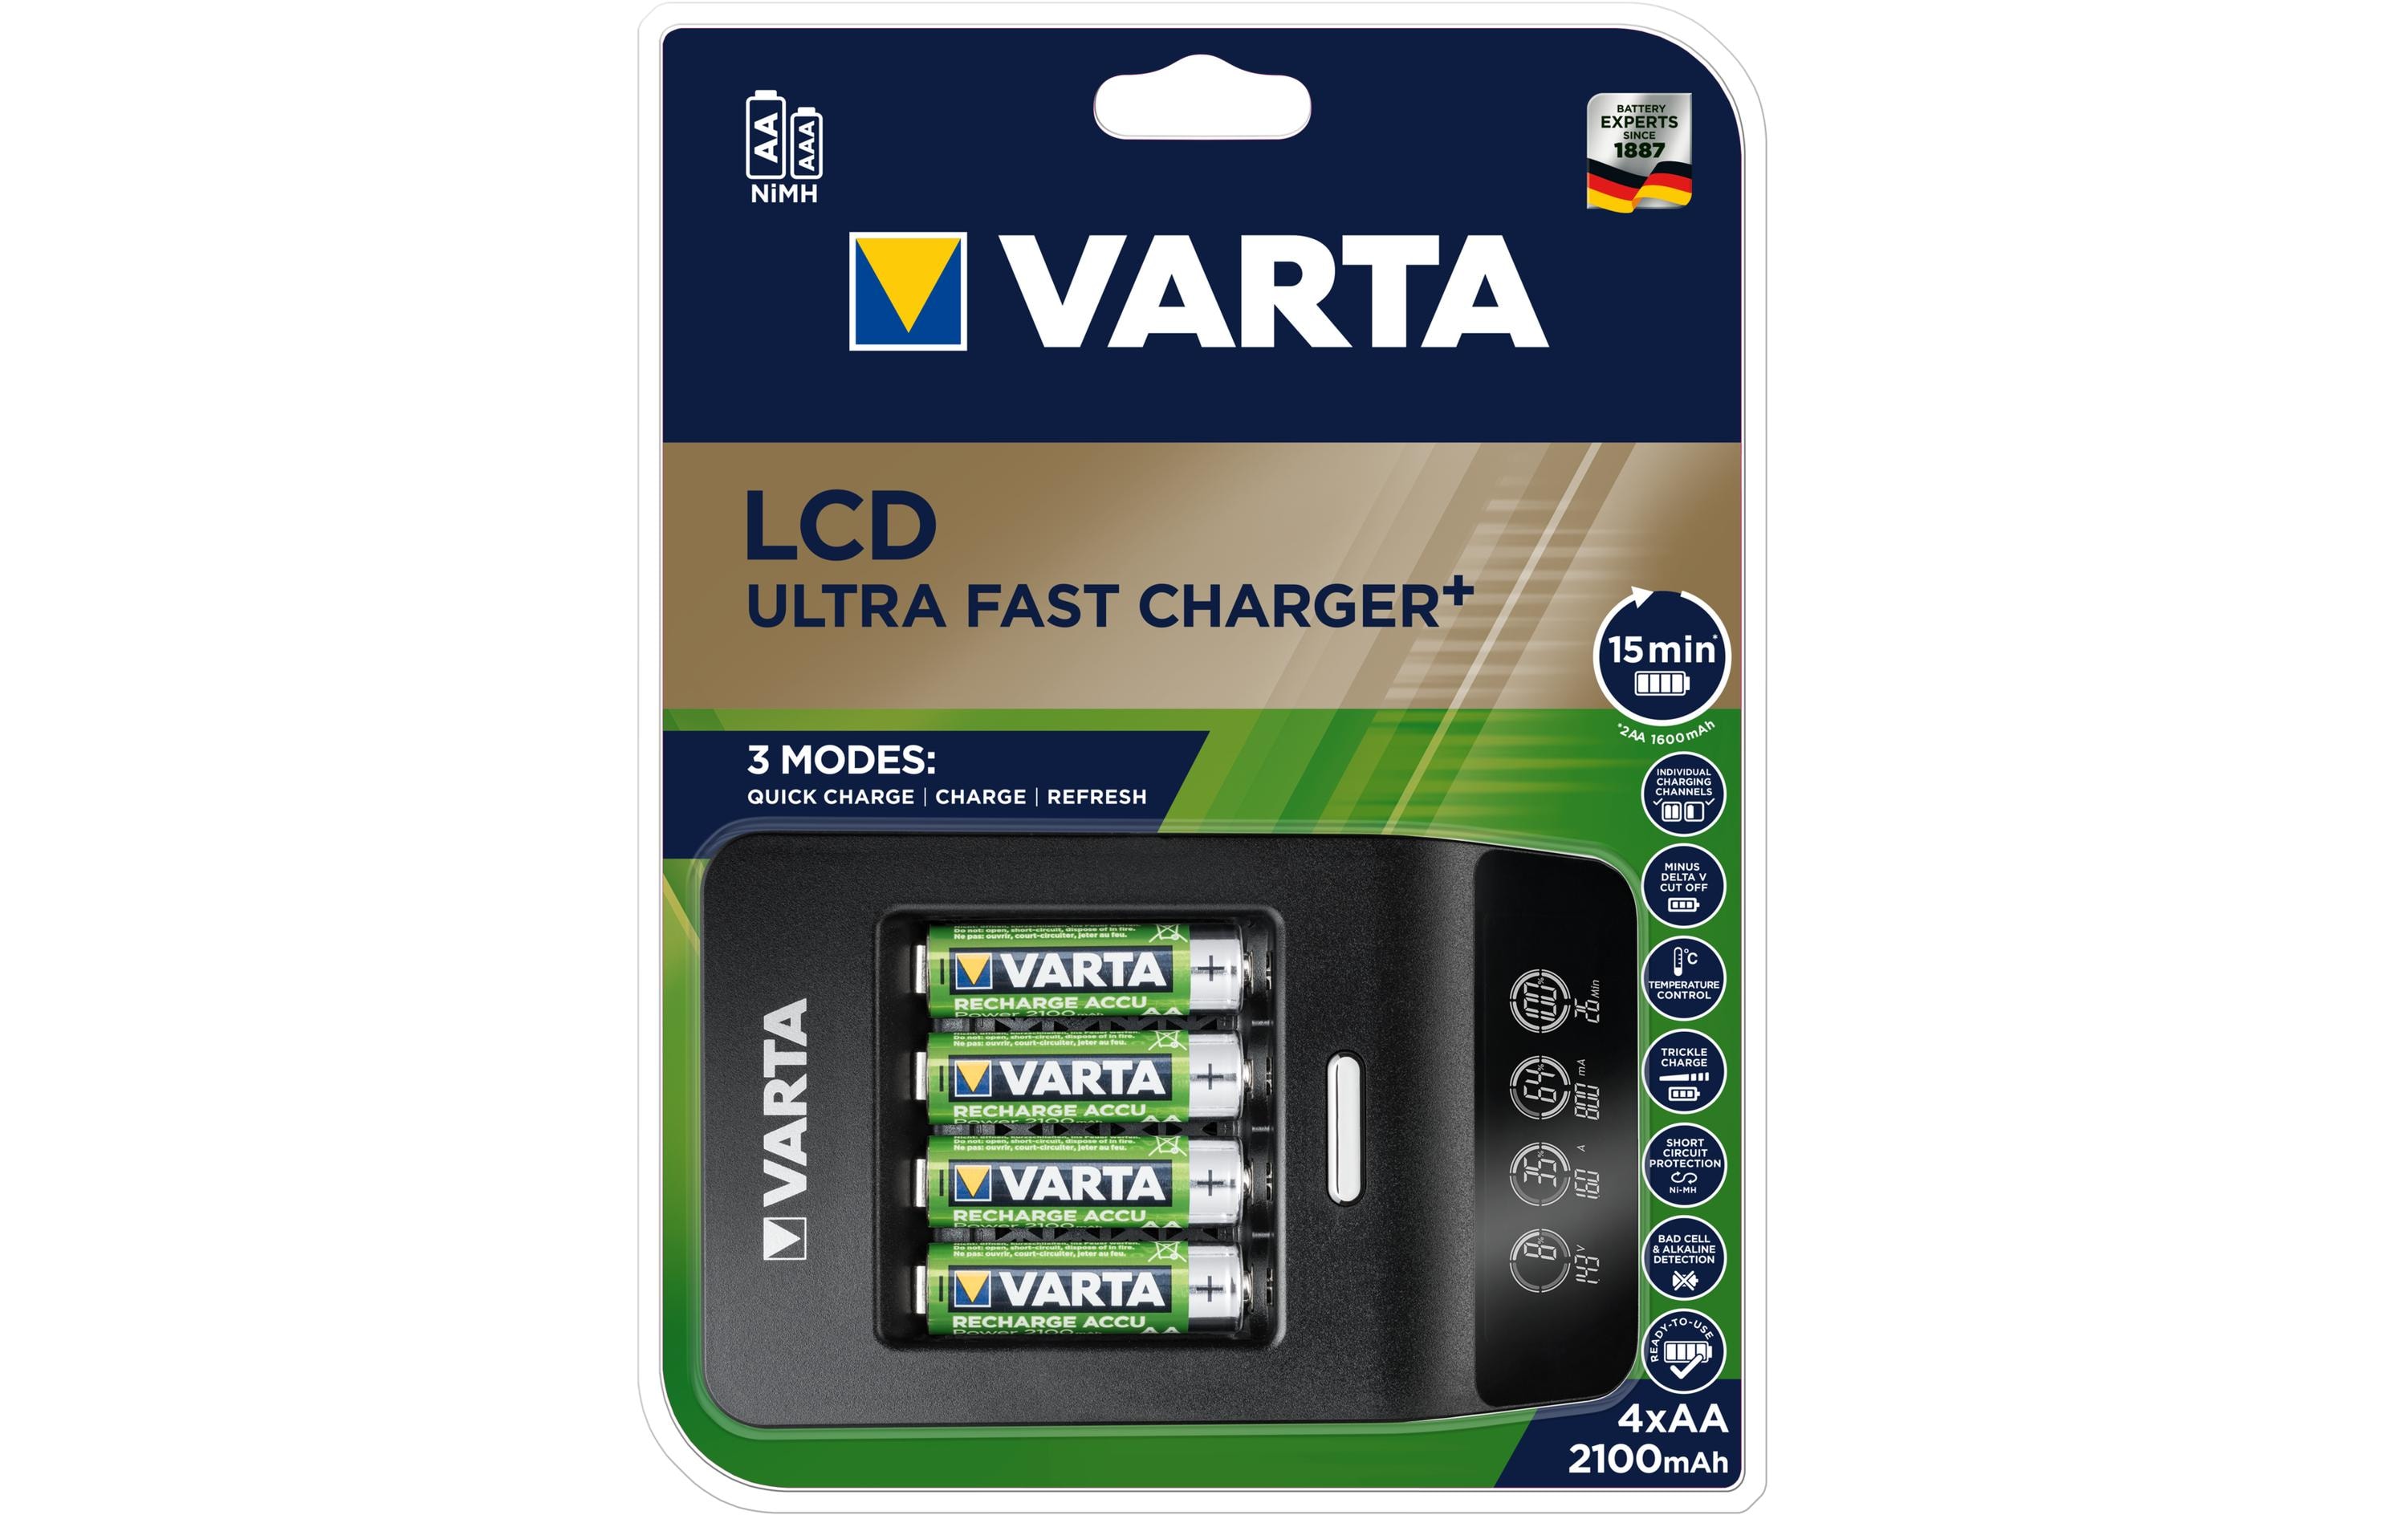 Varta Ladegerät LCD Ultra Fast Charger+ inkl. 4xAA